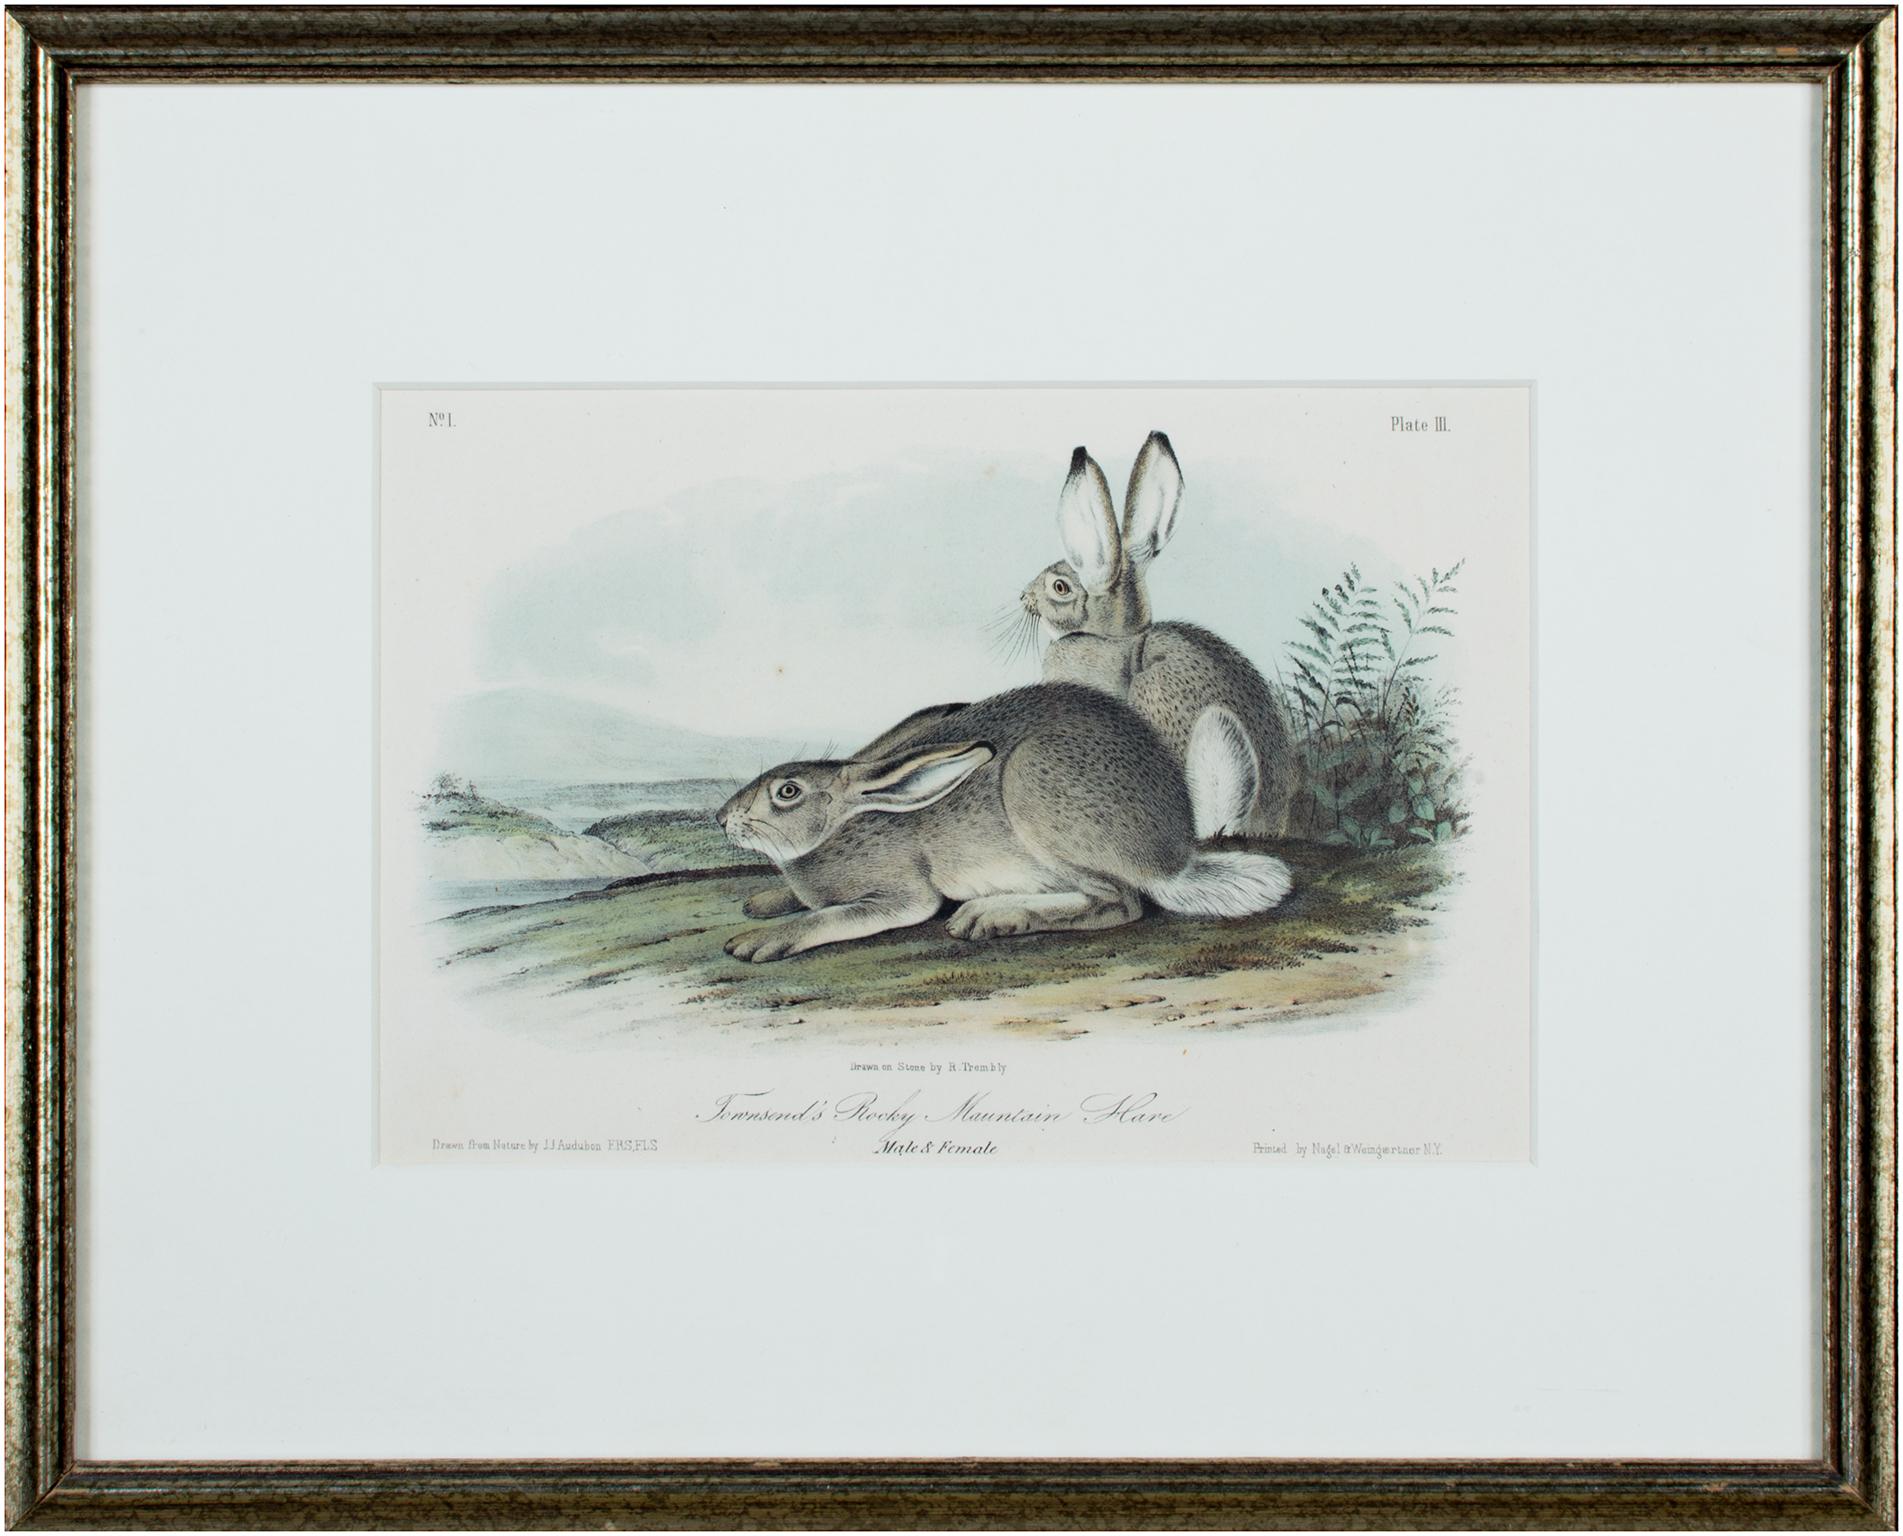 19th century color lithograph hares animal nature print wildlife - Academic Print by John James Audubon